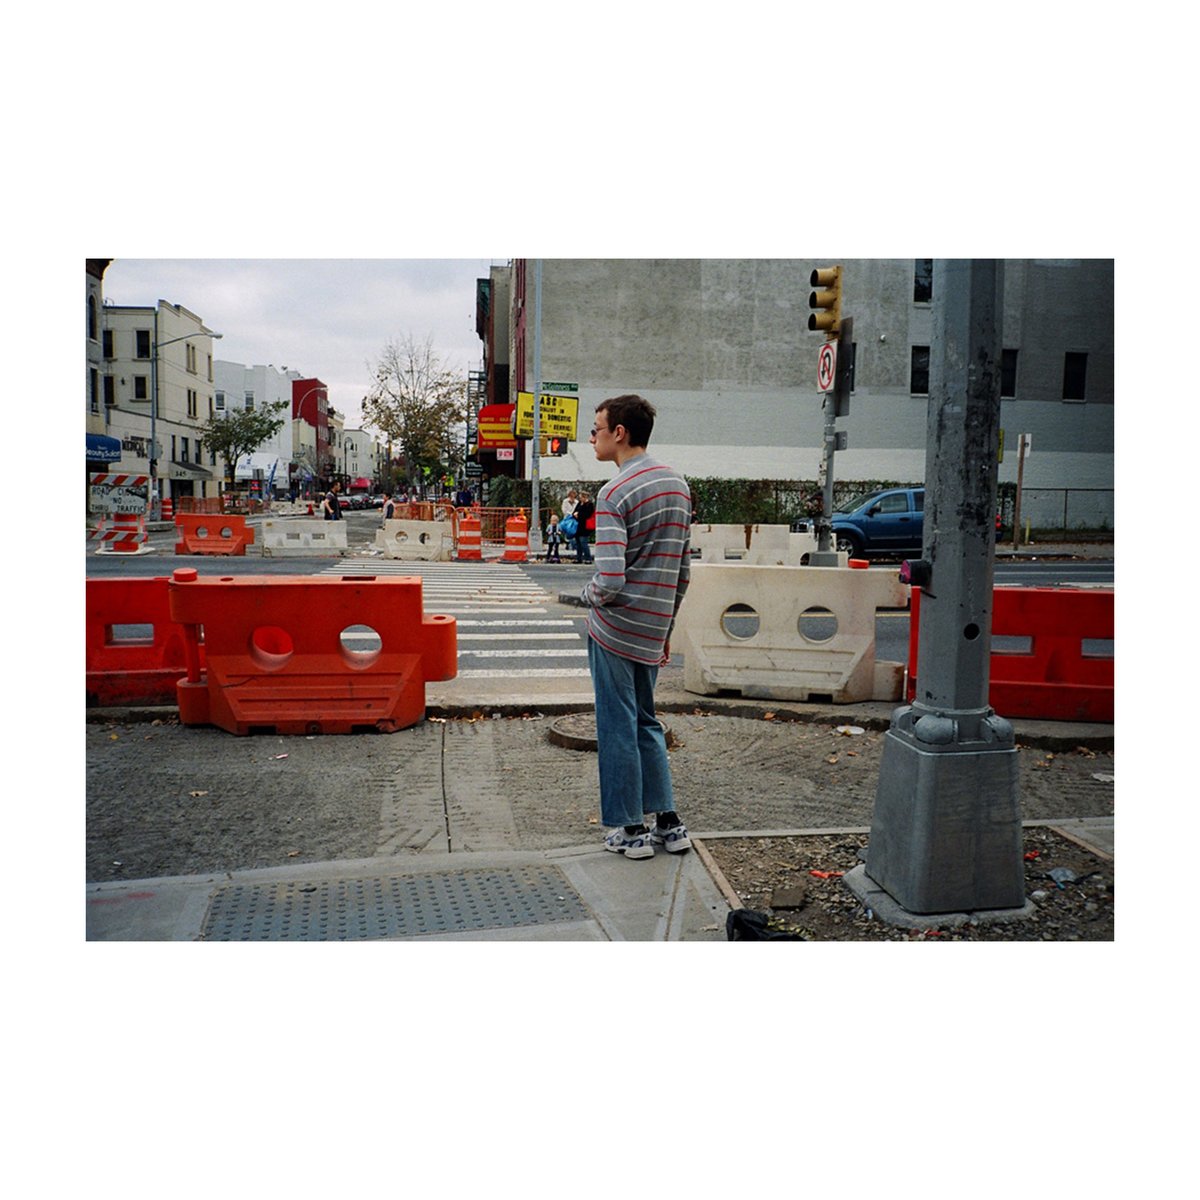 35mm, Greenpoint, Brooklyn. Highwaters baby

#35mm, #contaxt3, #nyc, #madisonsquarepark, #filmphotography #filmisnotdead #film #photography #analog #analogphotography #filmcommunity #ishootfilm #35mmfilm #photo #filmisalive #filmphotographic #analogue #kodak #fashion